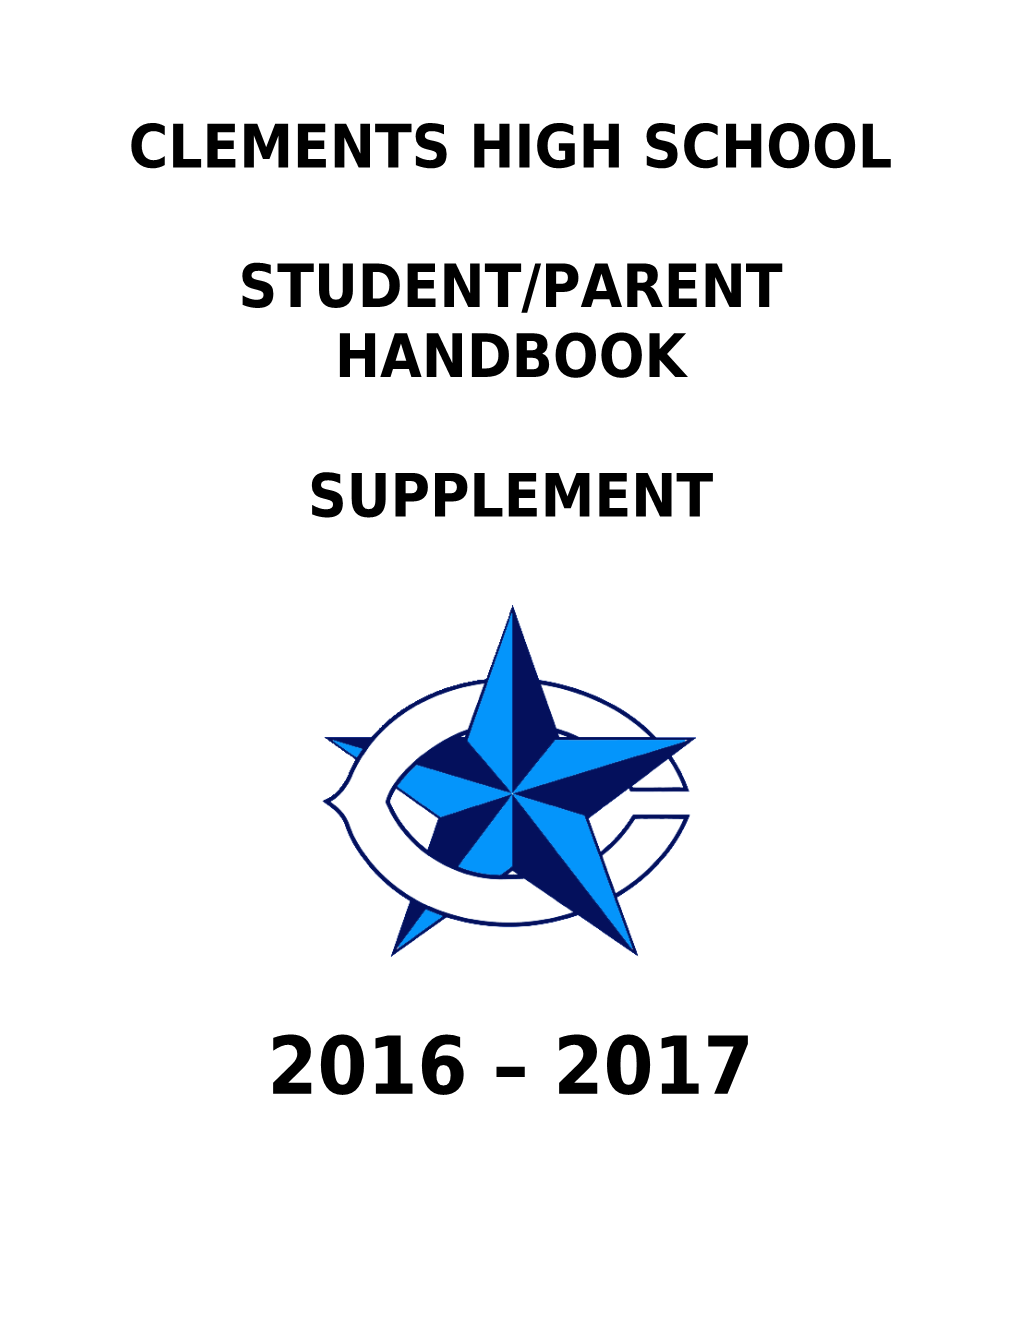 Student/Parent Handbook Supplement